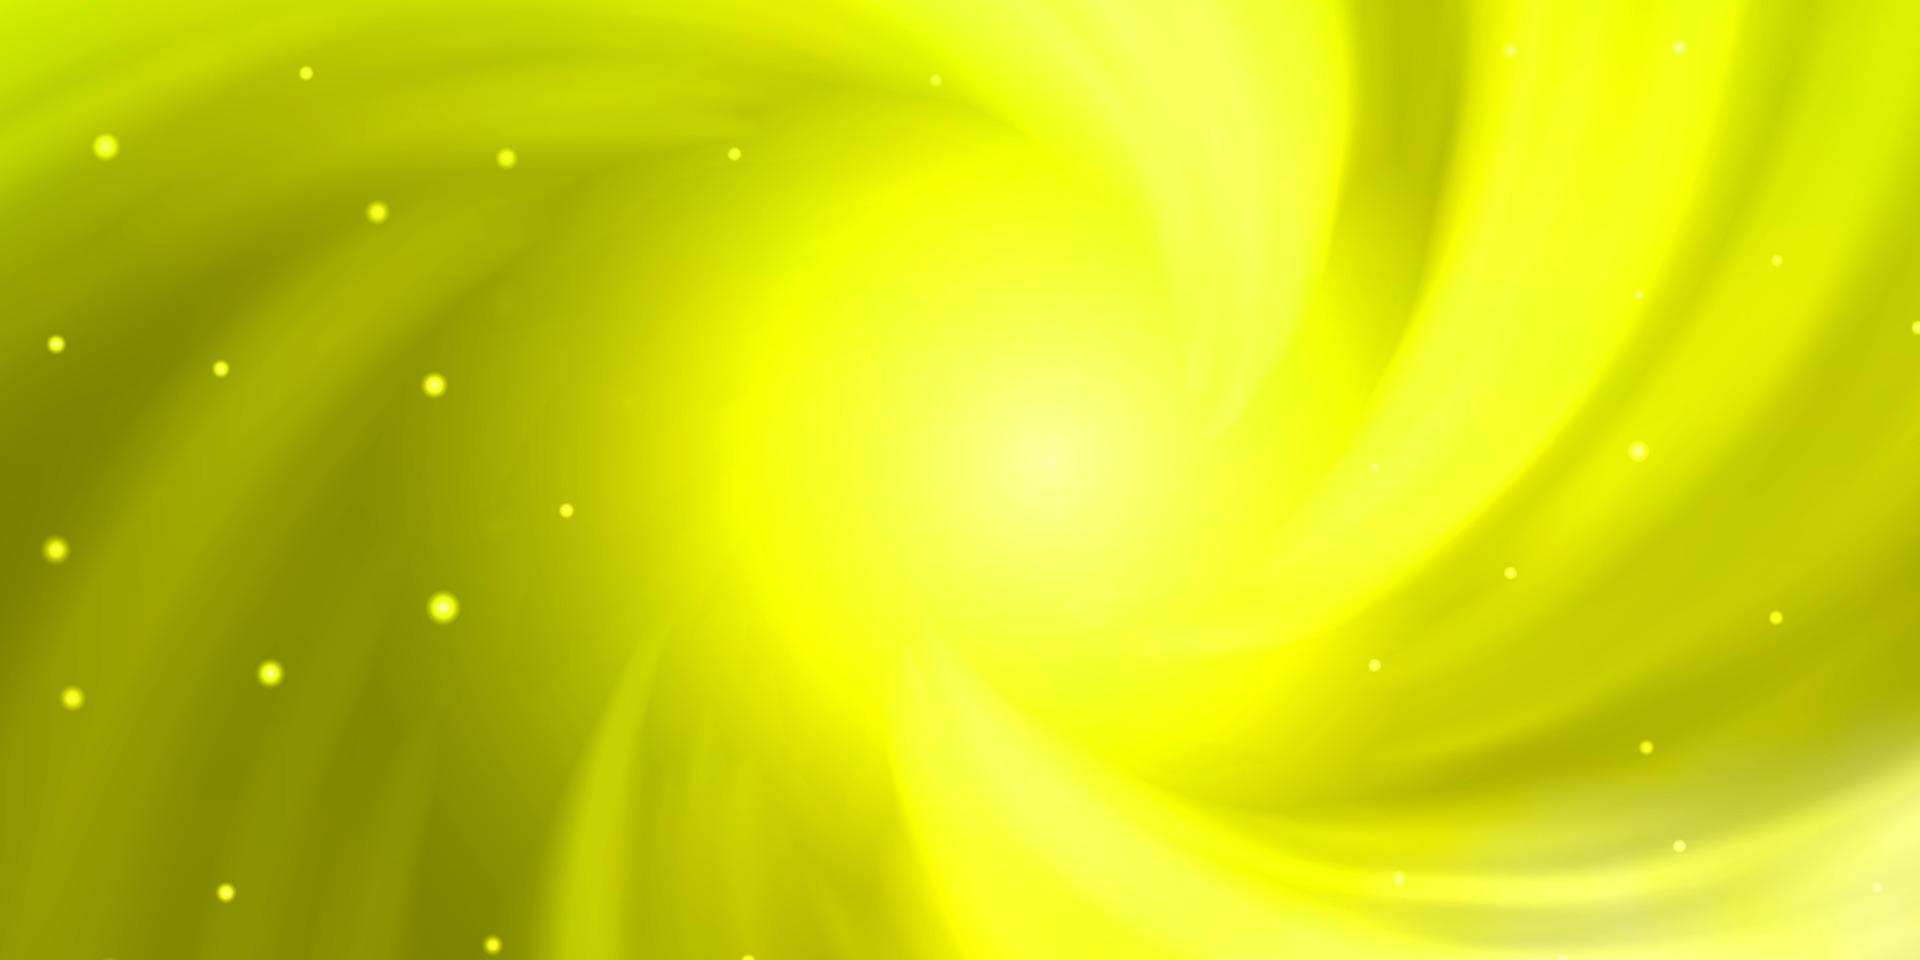 de fundo vector verde e amarelo claro com estrelas pequenas e grandes.